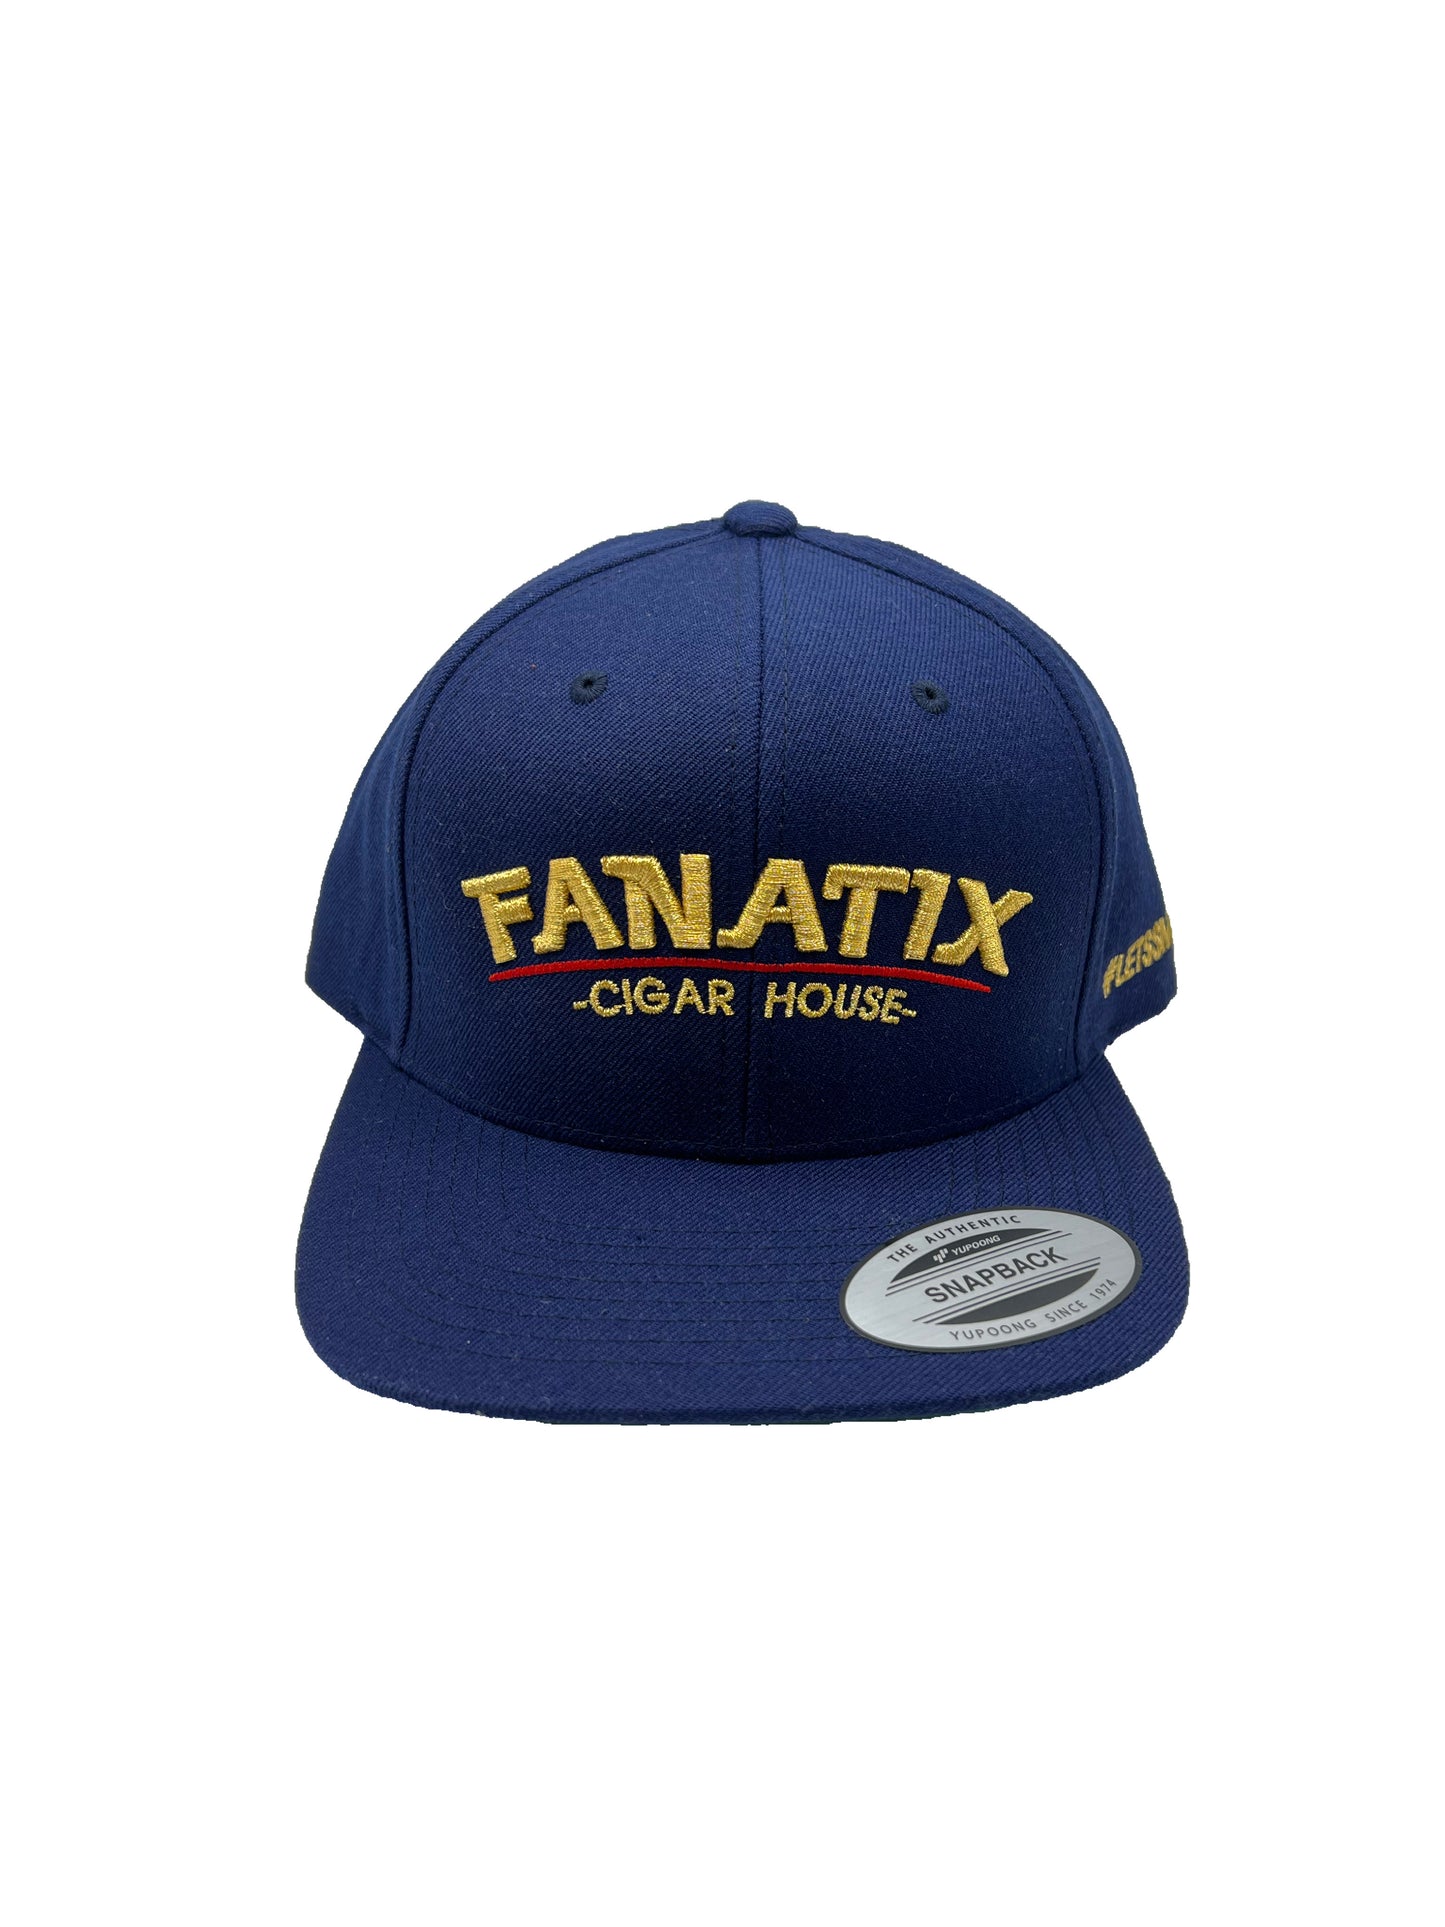 Fanatix Cigar House Hat - Navy Blue